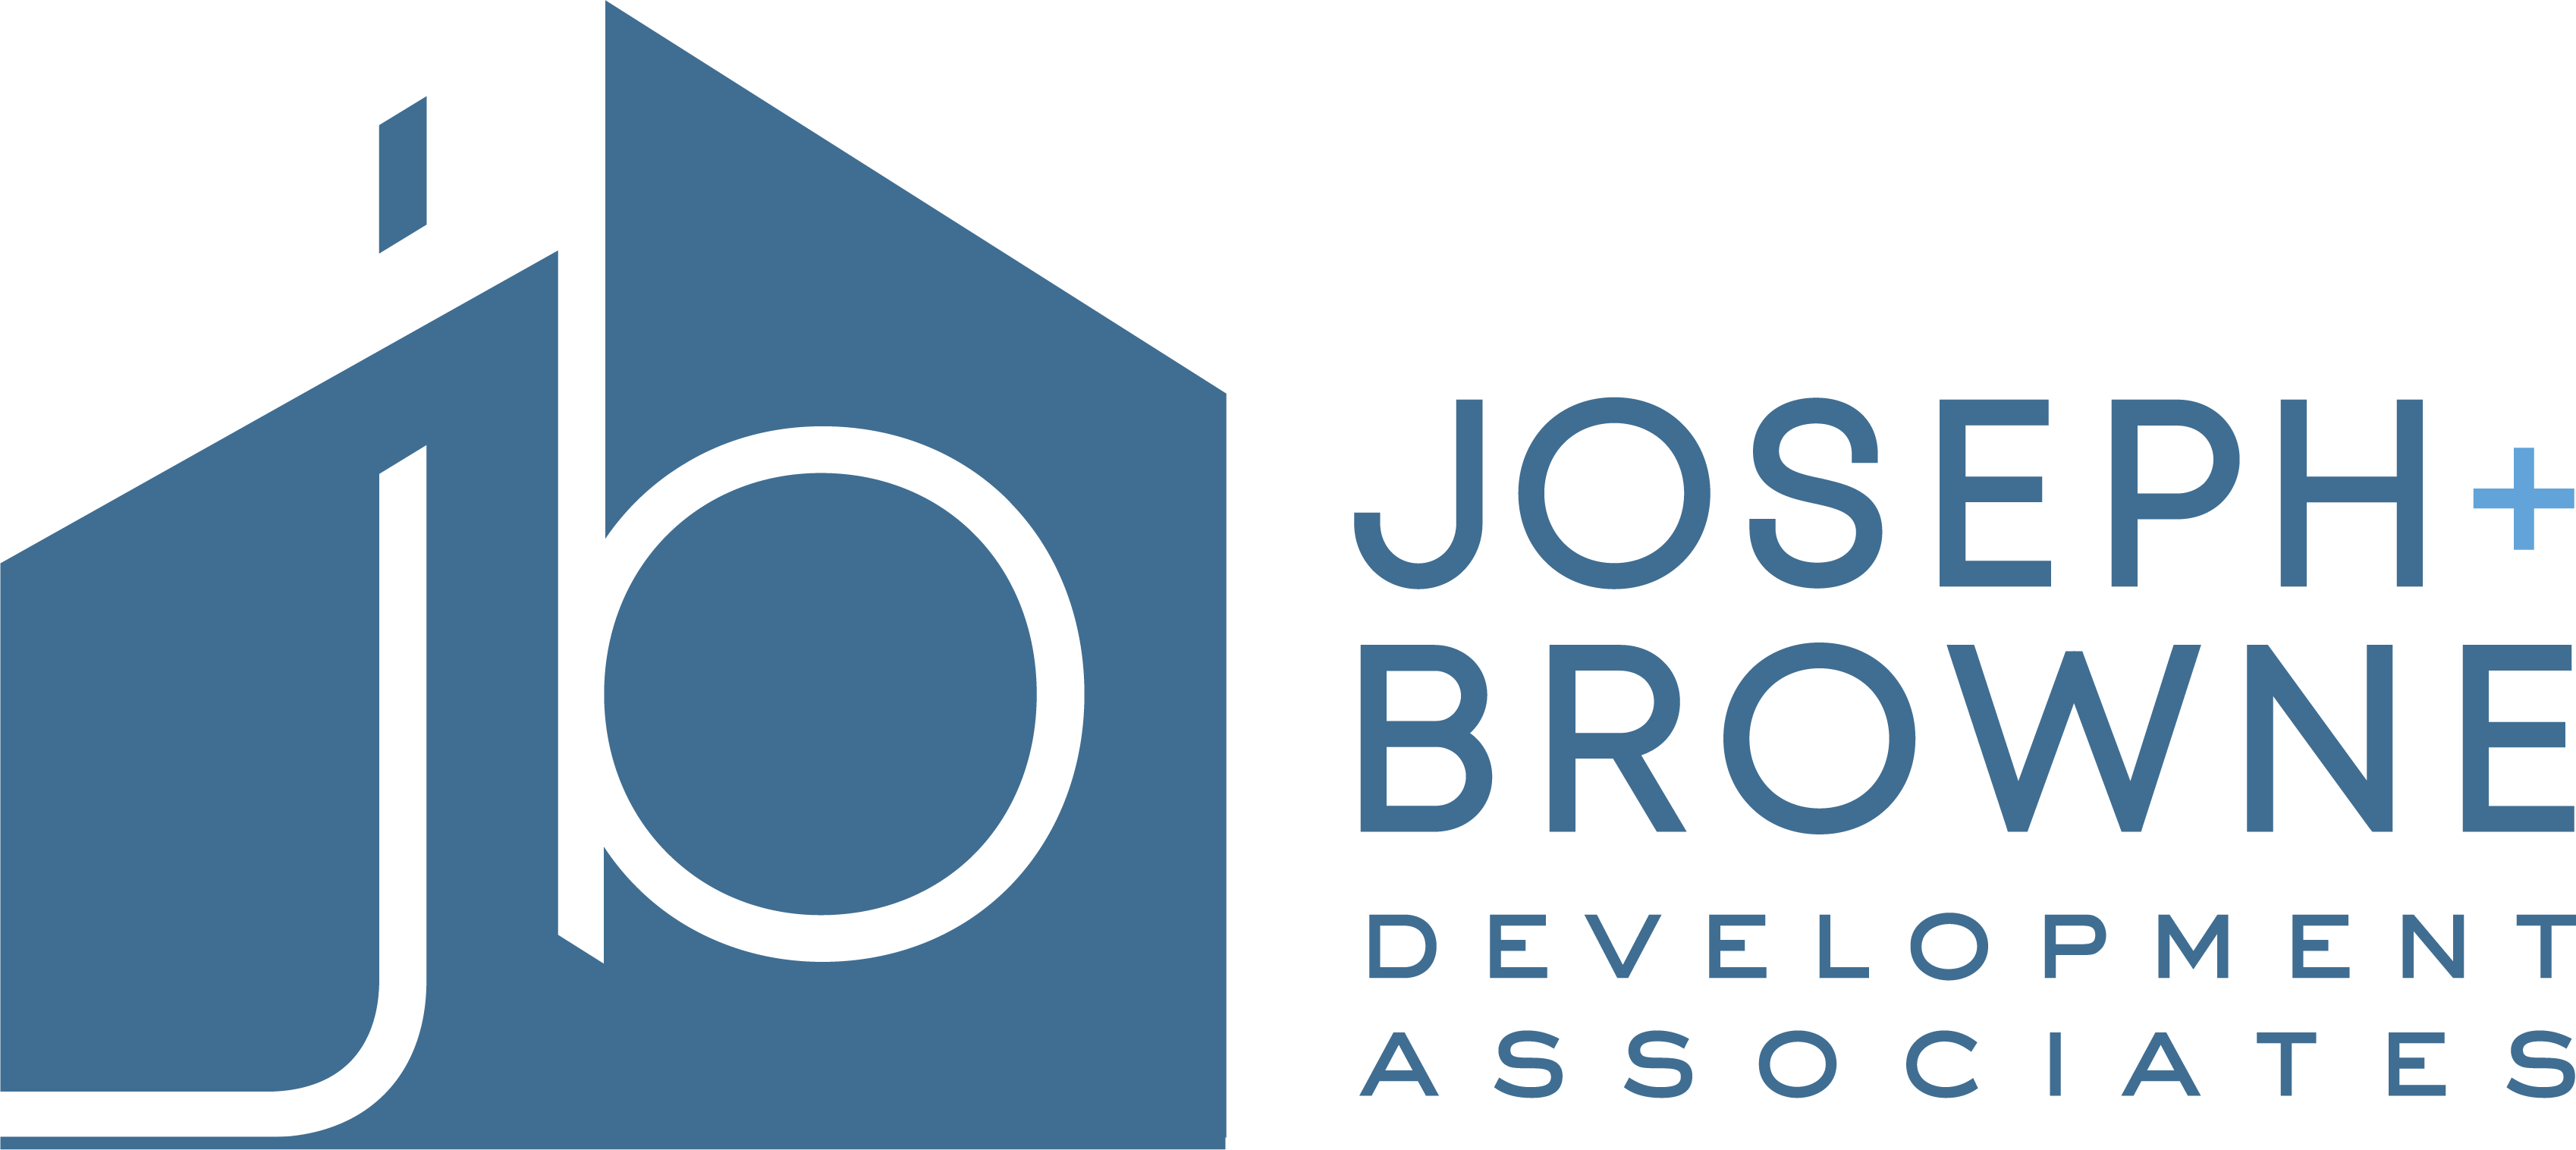 Joseph Brown Development Associates Logo